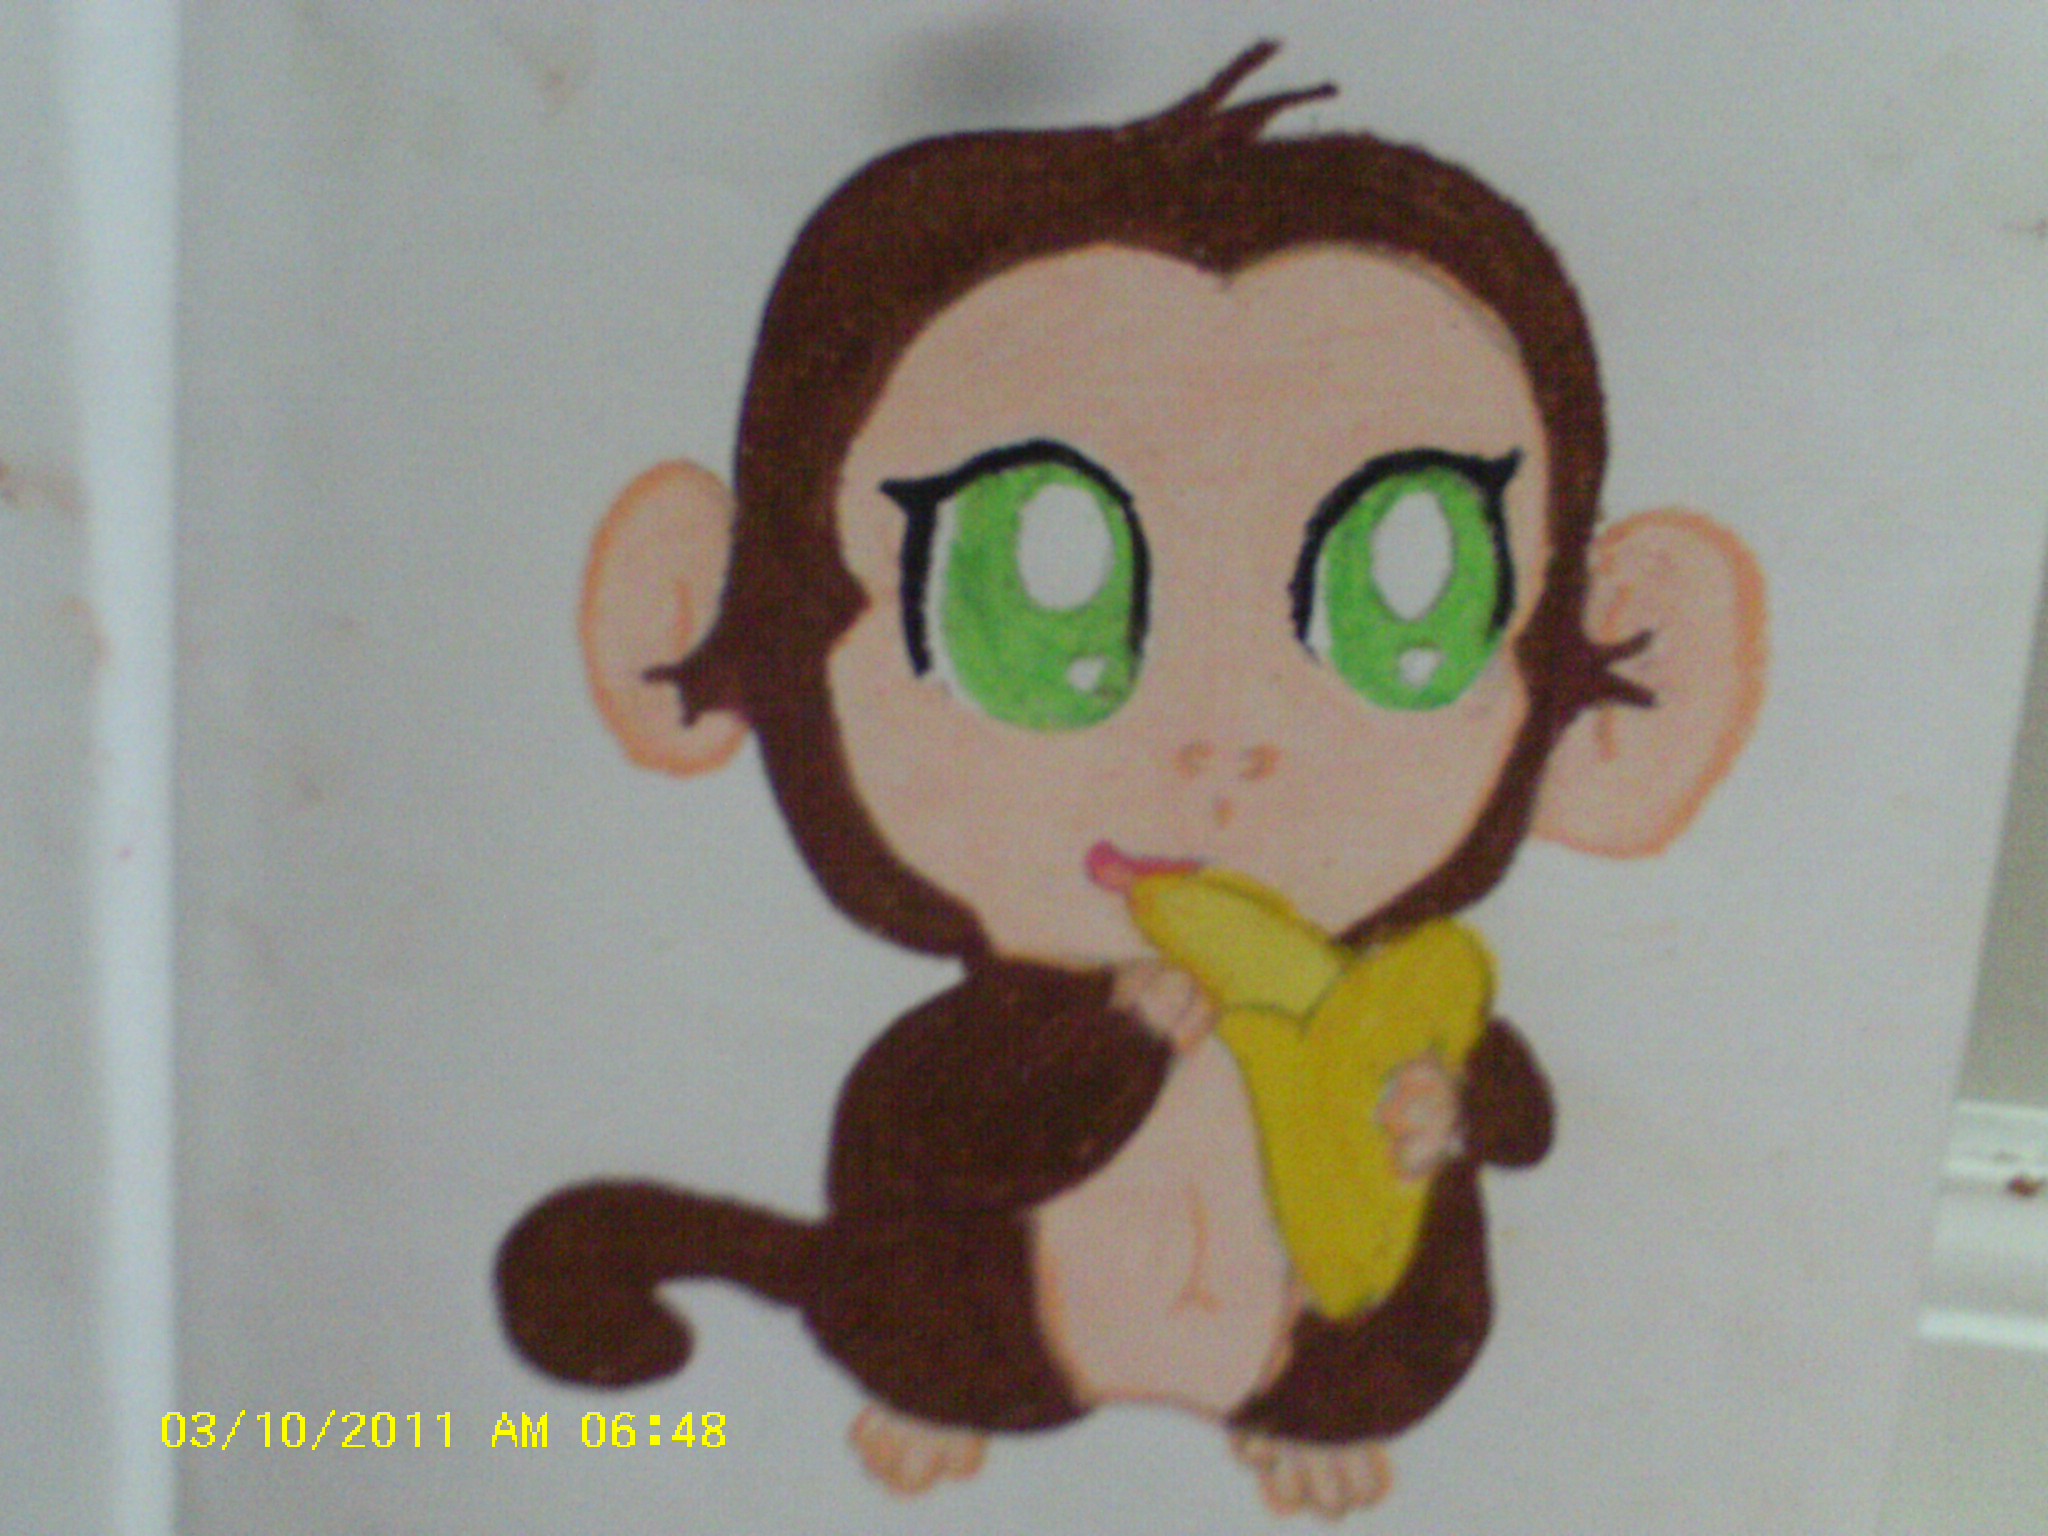 Cute Monkey Part 2 Drawing - TeamAlexander © 2015 - Jul 19, 2012